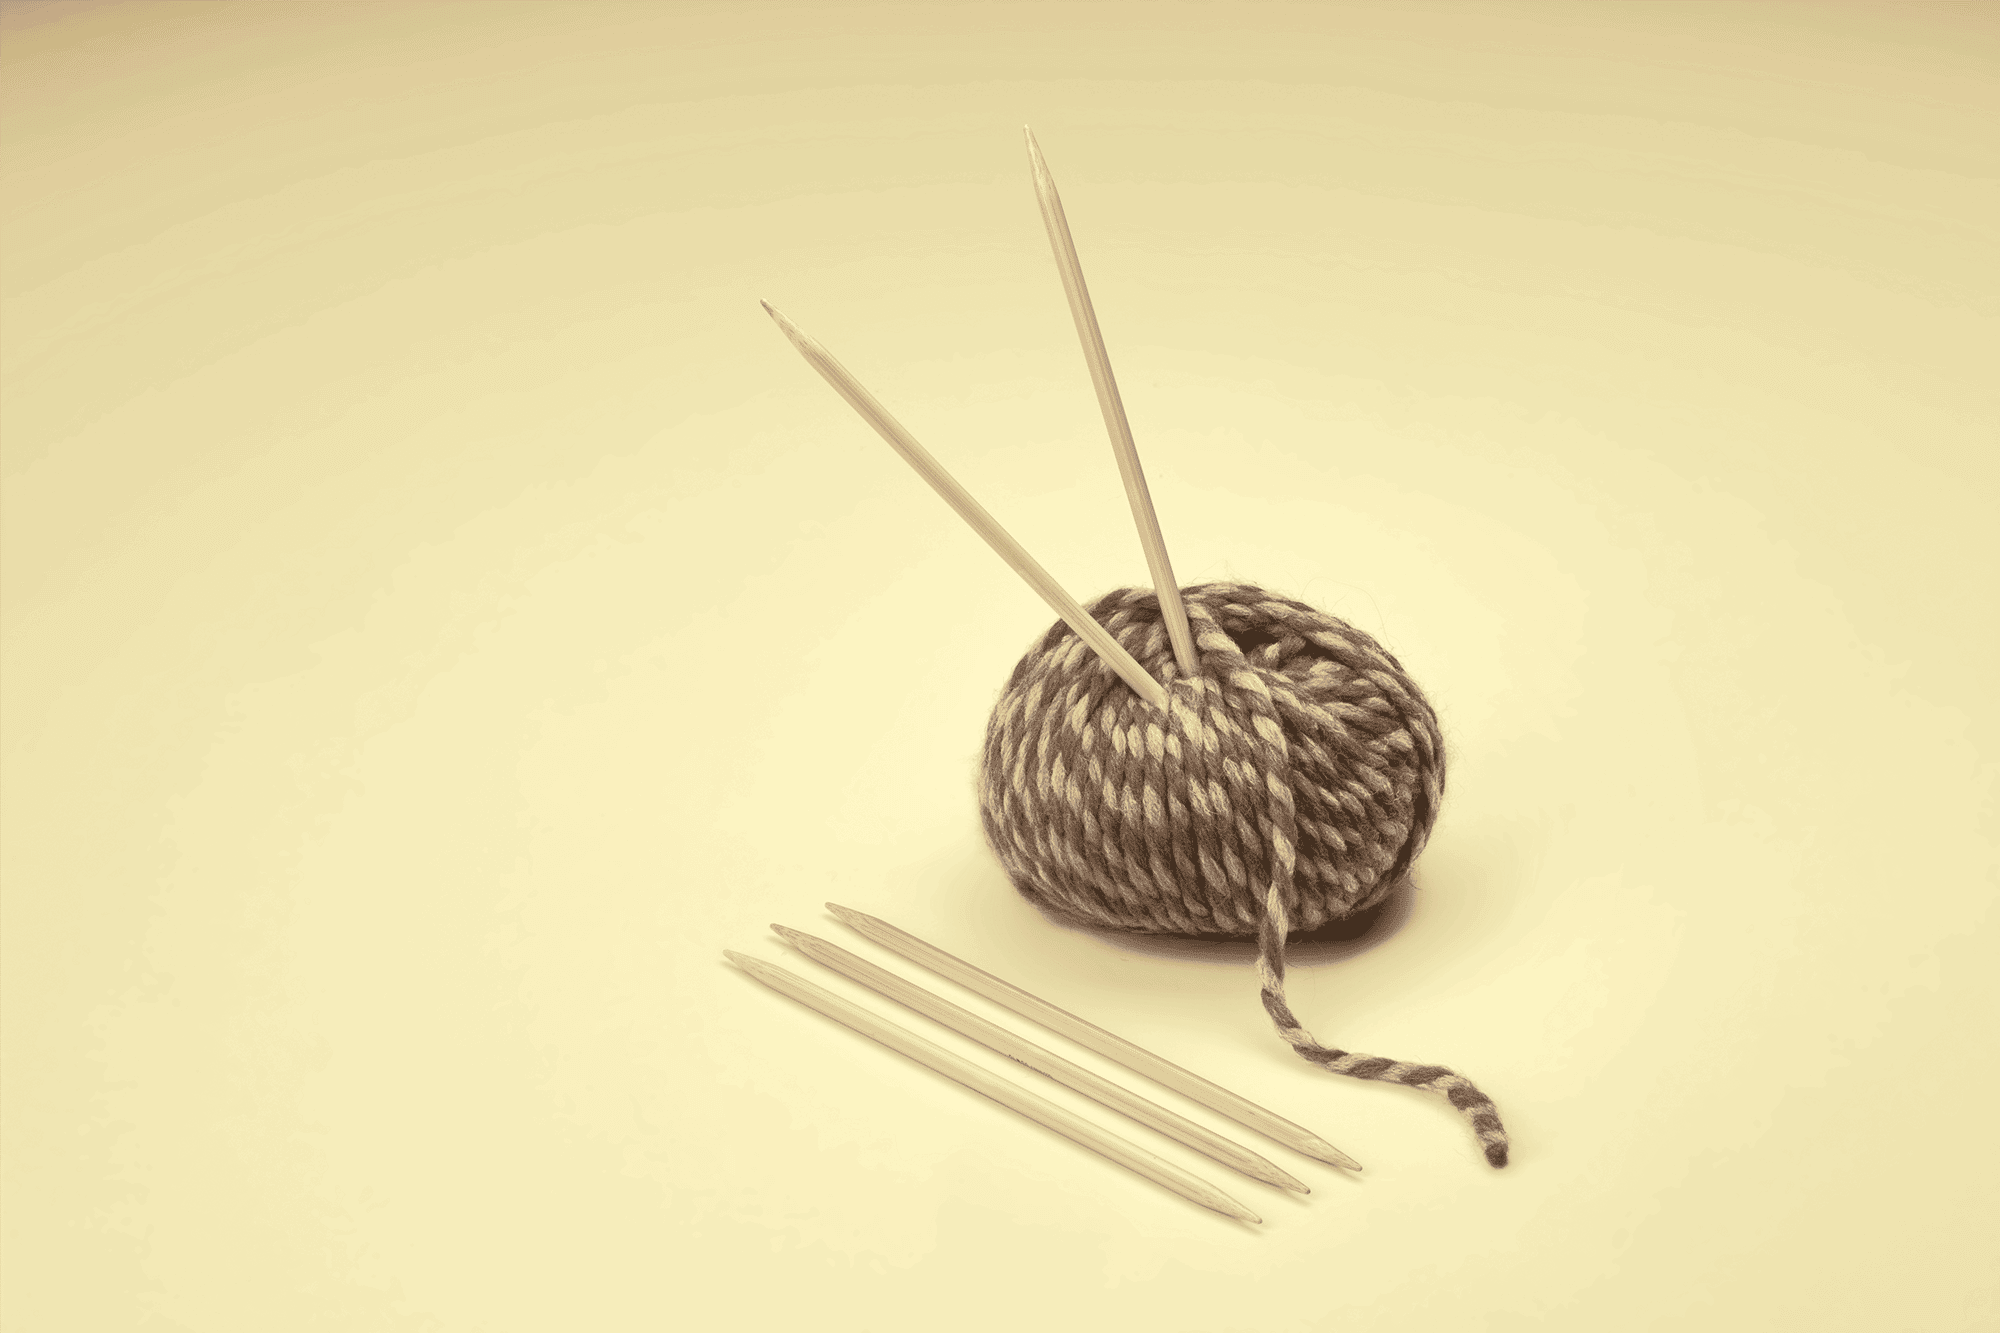 501 7 addiNature Bamboo stocking knitting needle double pointed needles bamboo 2 10mm 1520cm US 0 15 6 8 madeinGermany mood1yellow rgb knitting keeps warm,warm up,knitting for the needy